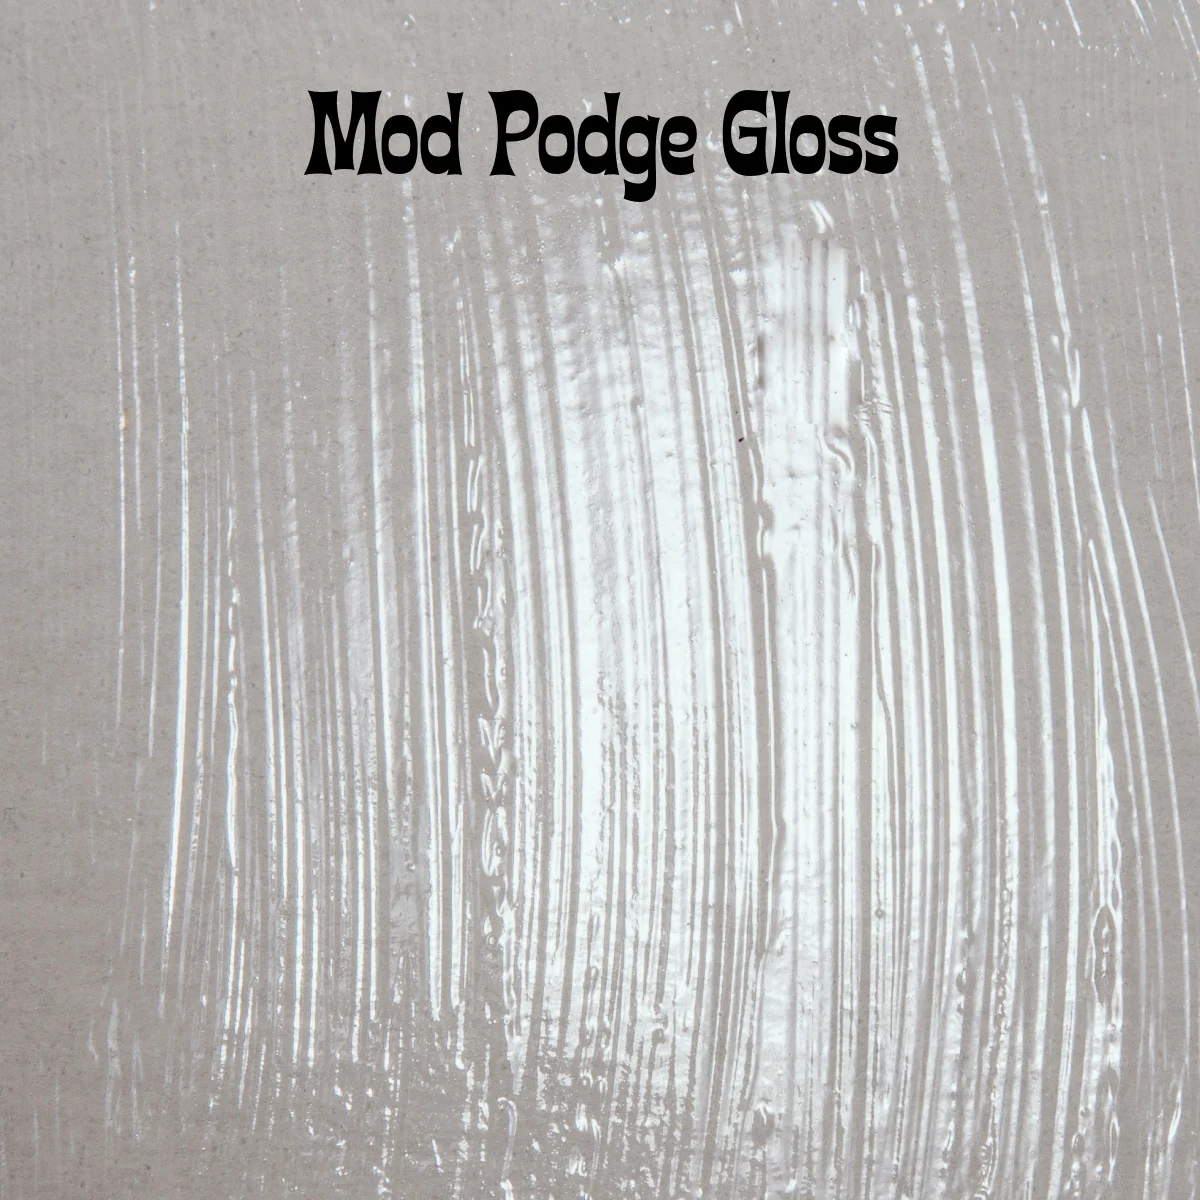 Mod Podge Gloss: Your Complete Guide - Mod Podge Rocks